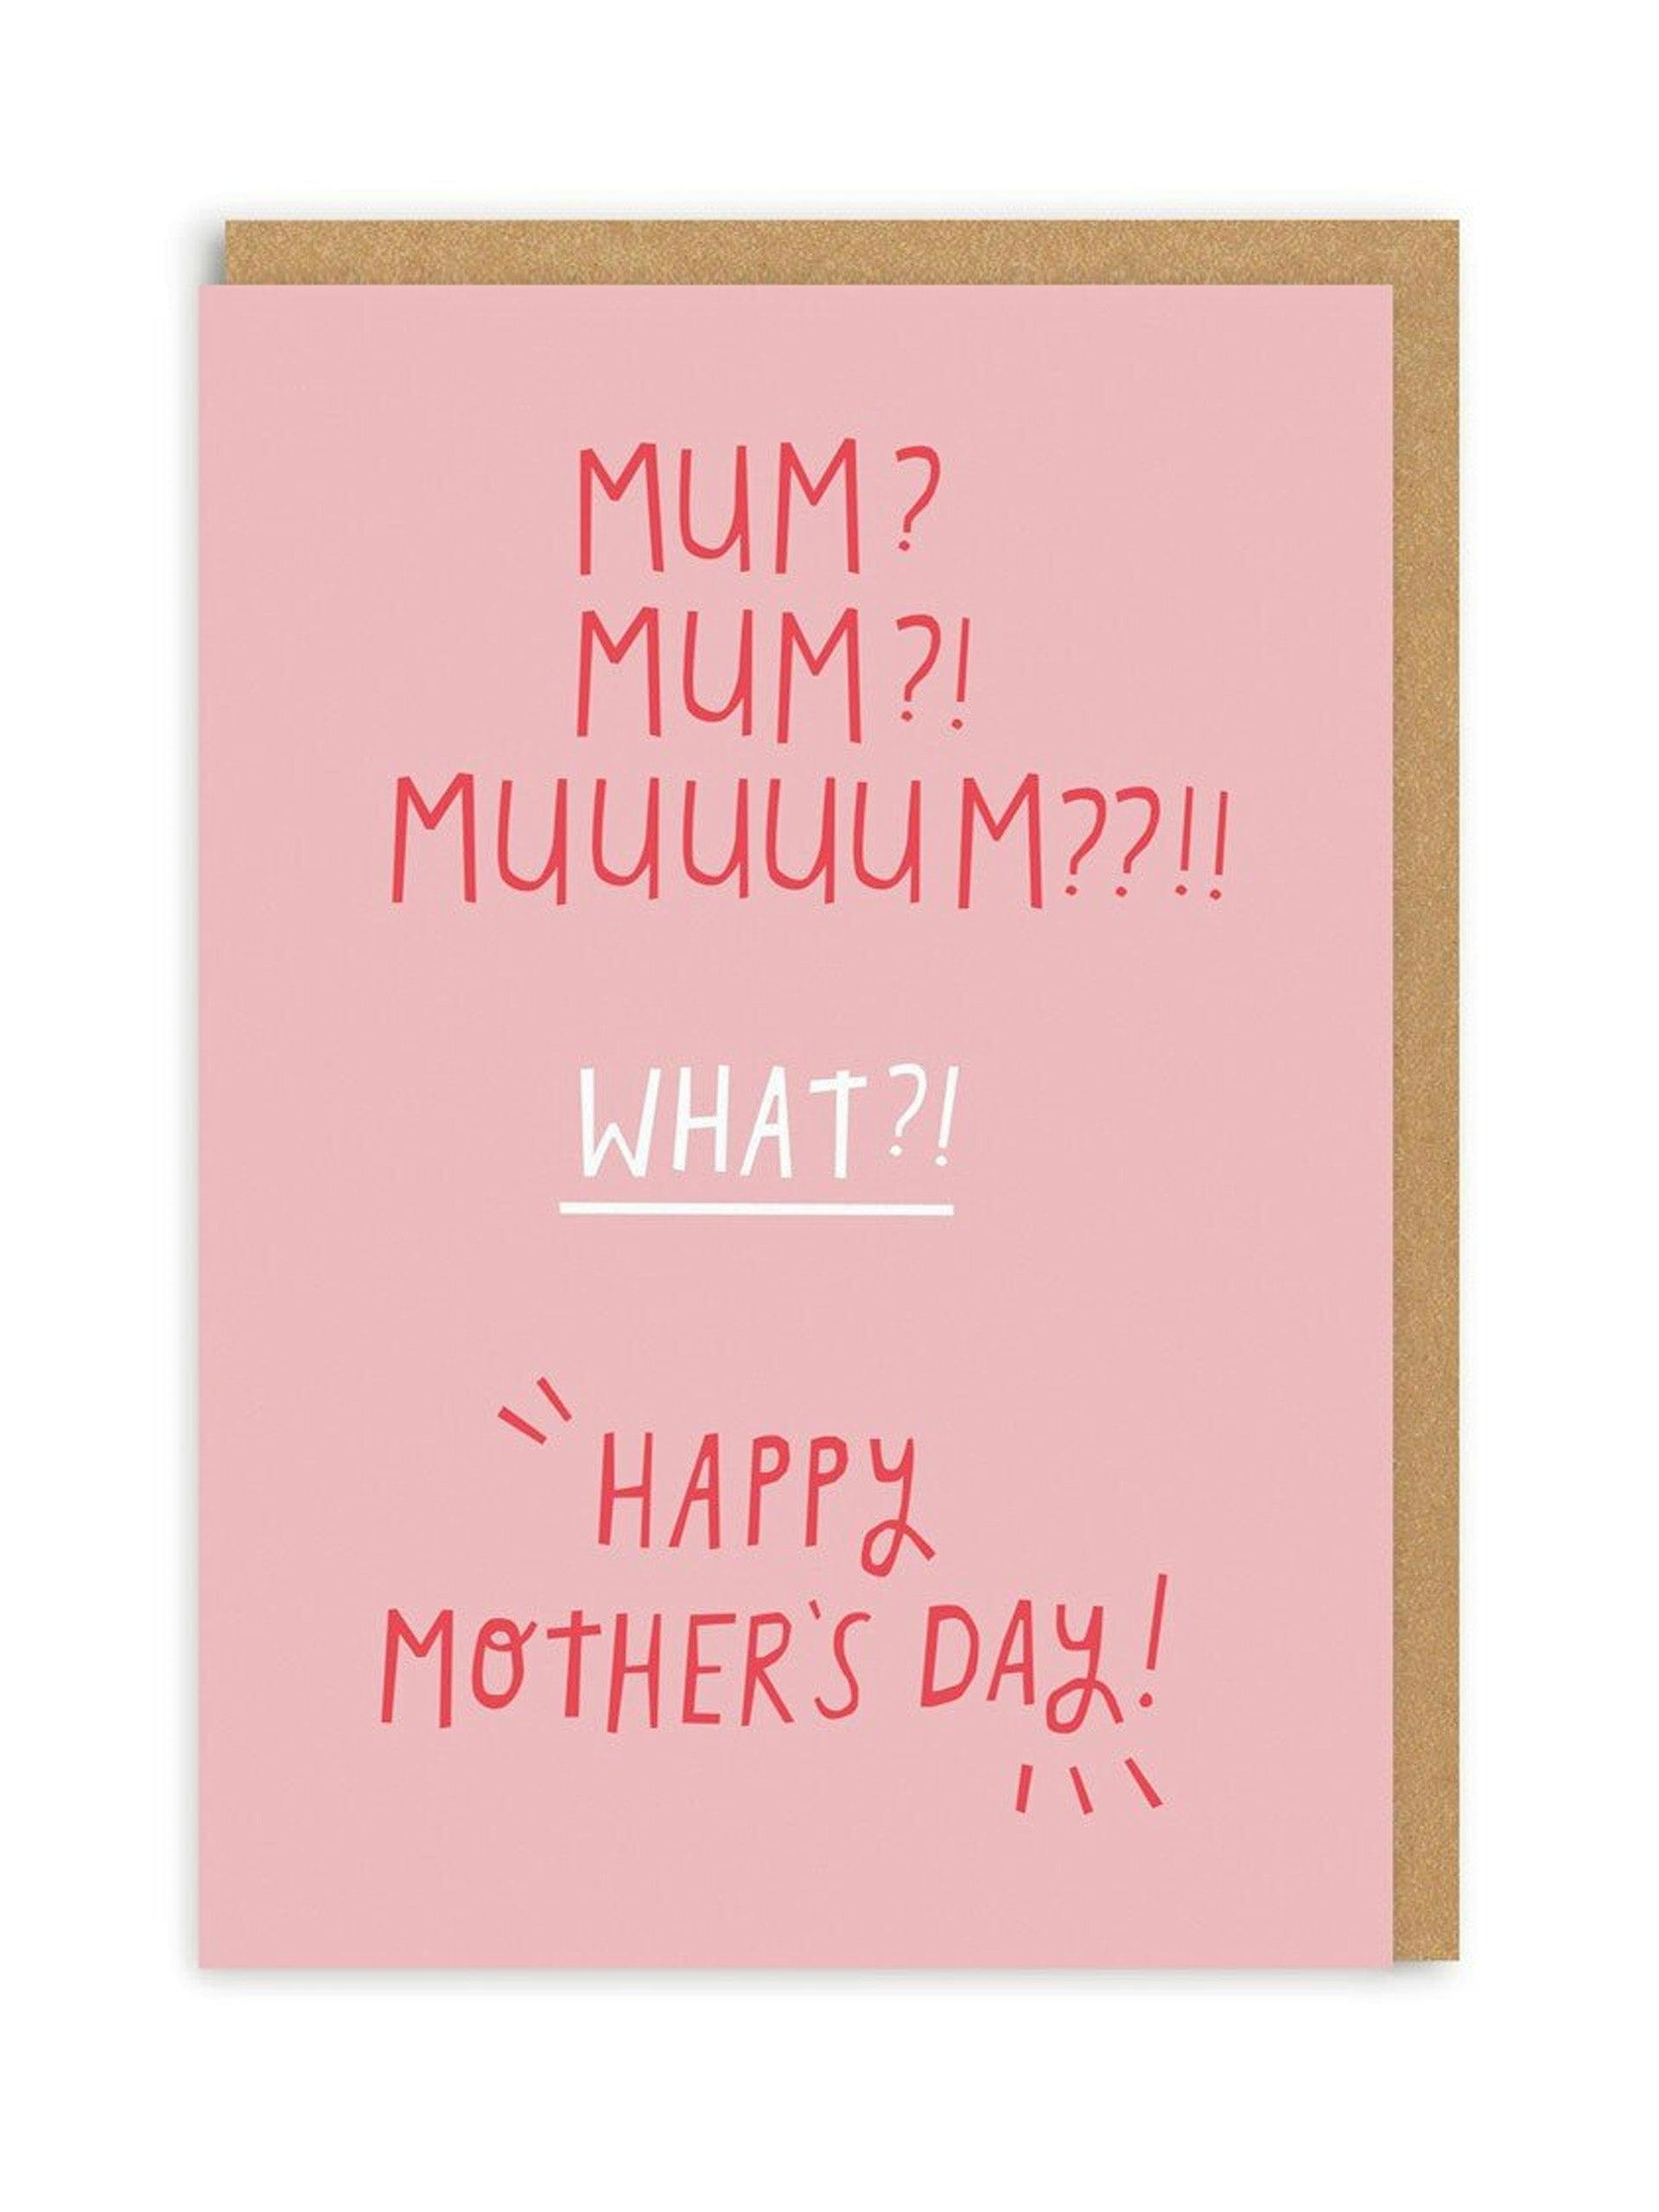 Mum? Mum? Mother's day card